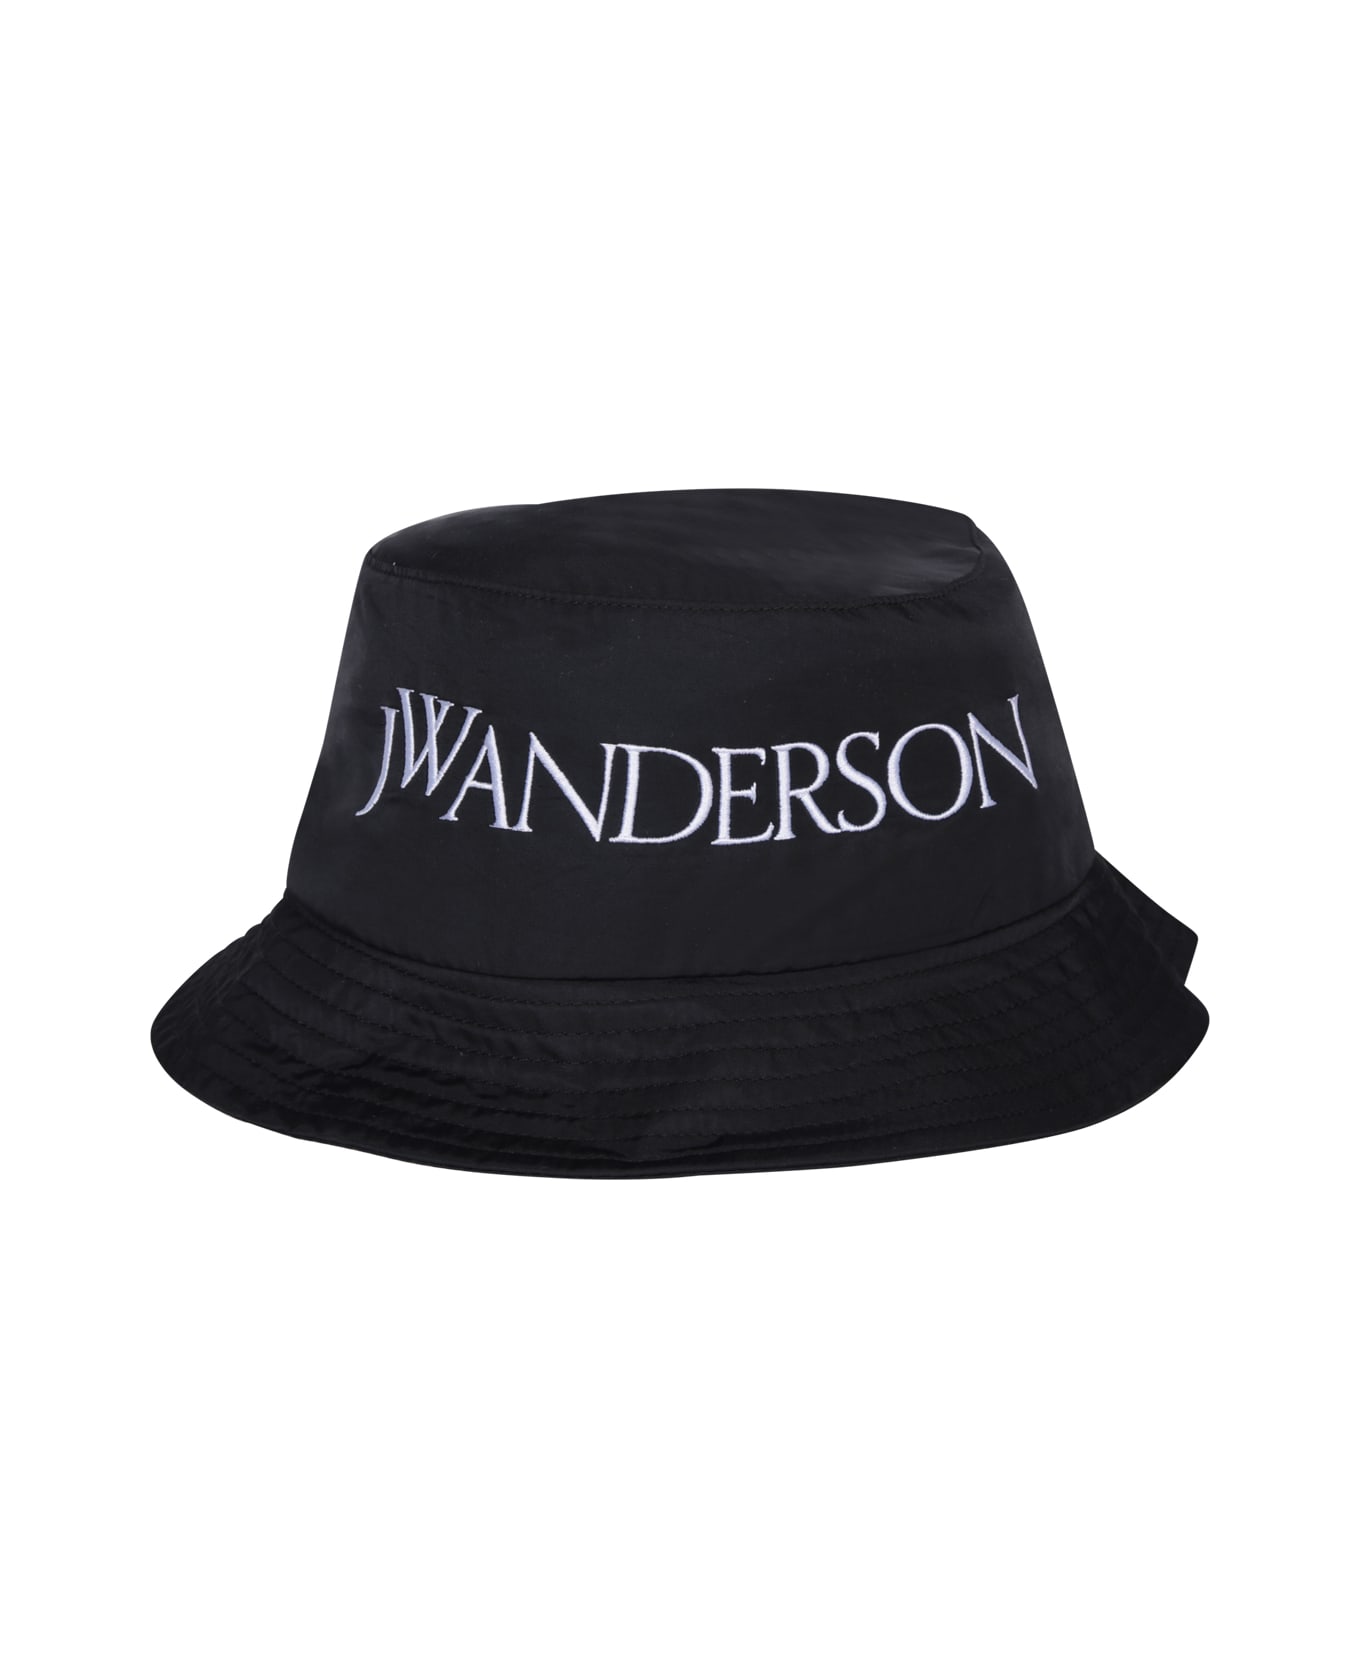 J.W. Anderson Black Nylon Blend Bucket Hat - Black